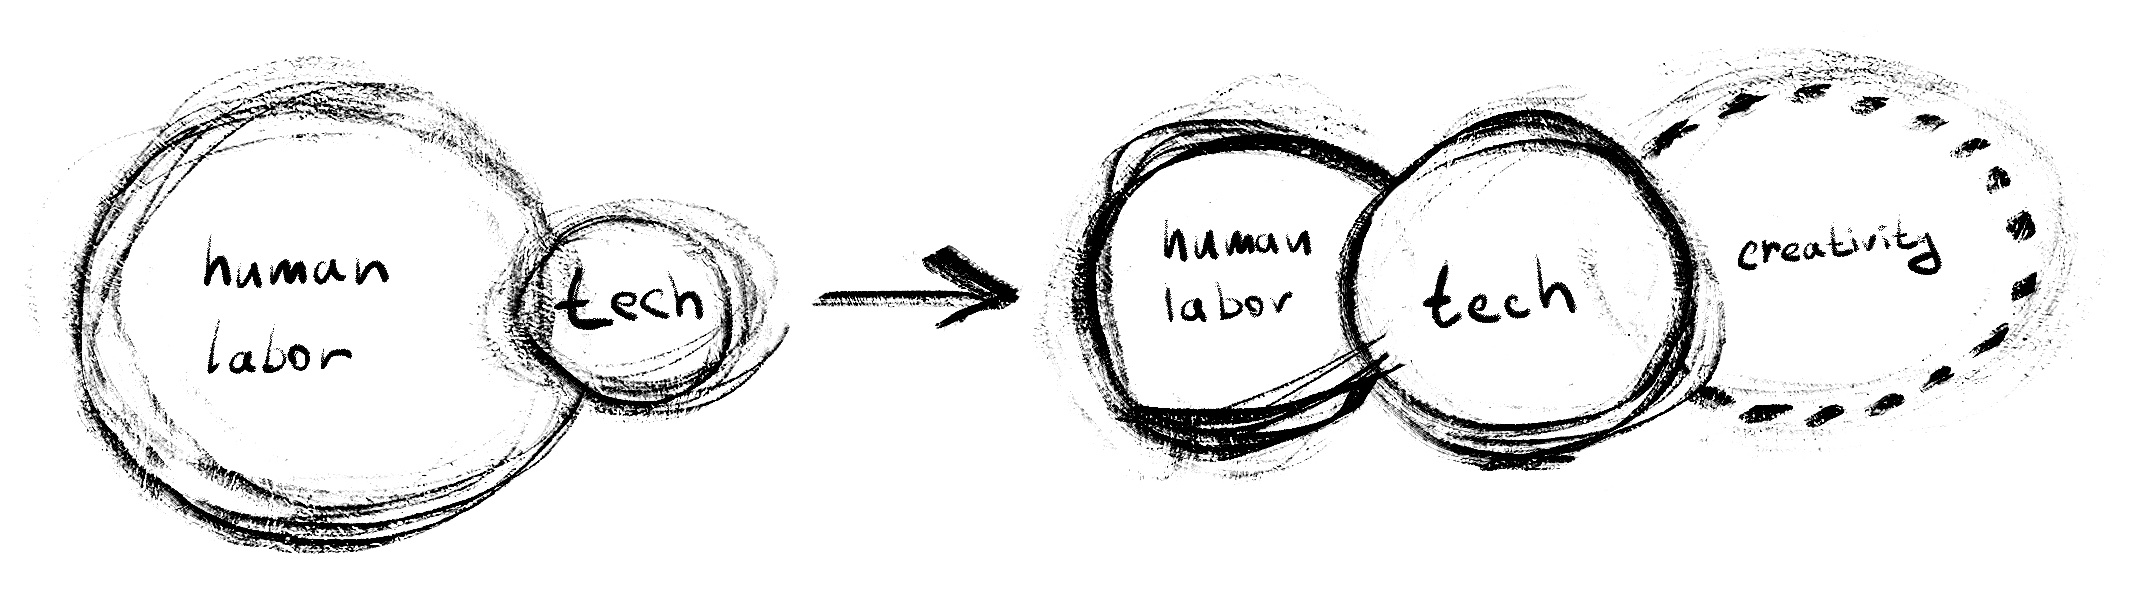 Figure 1: Correlation between human labor, tech and creativity.